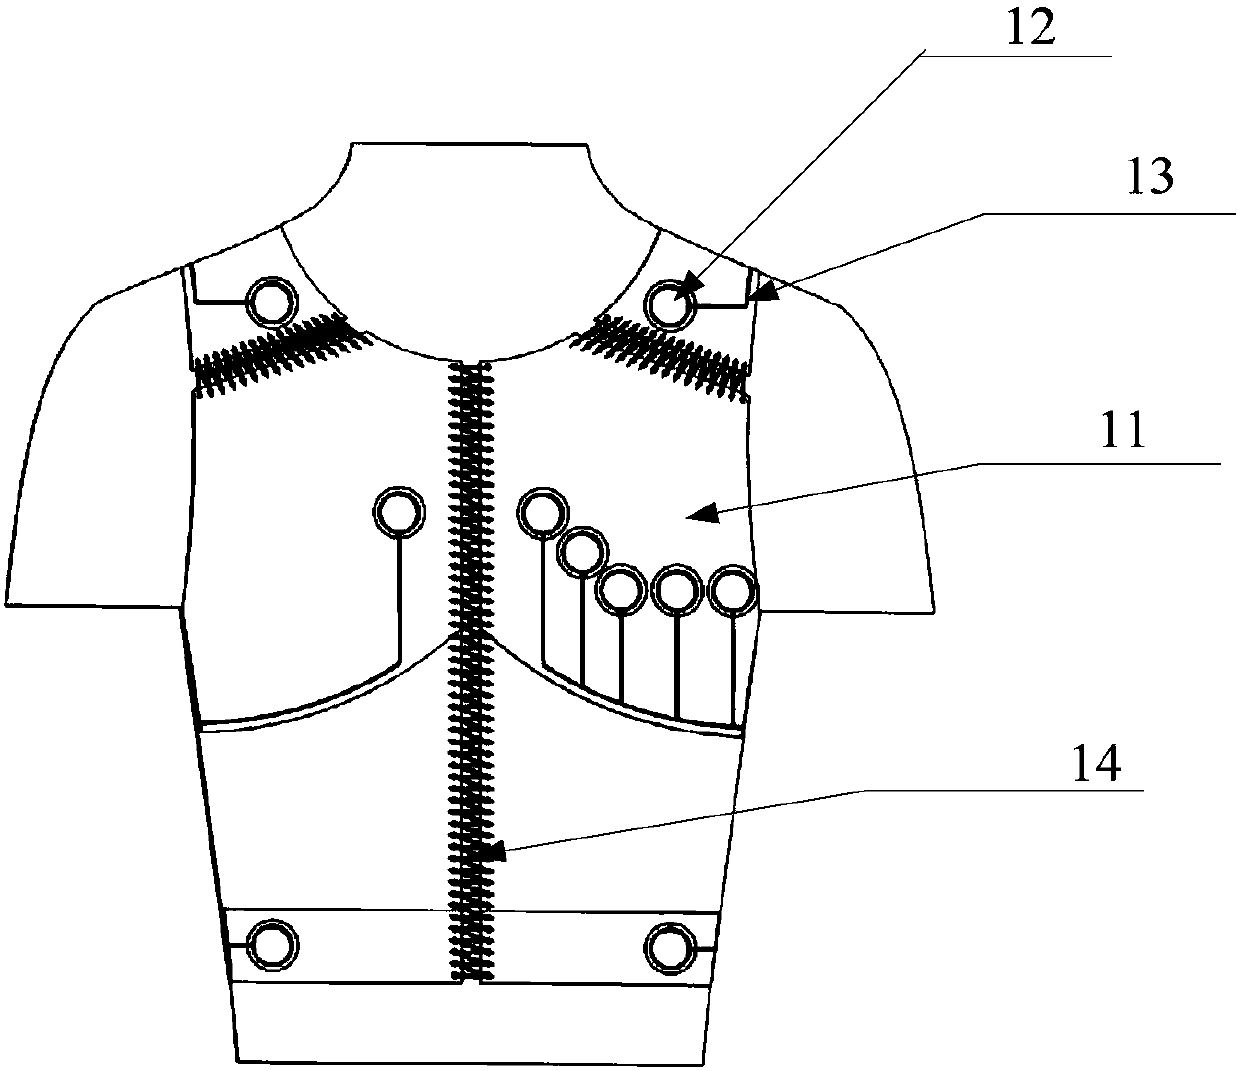 Electrocardio garment